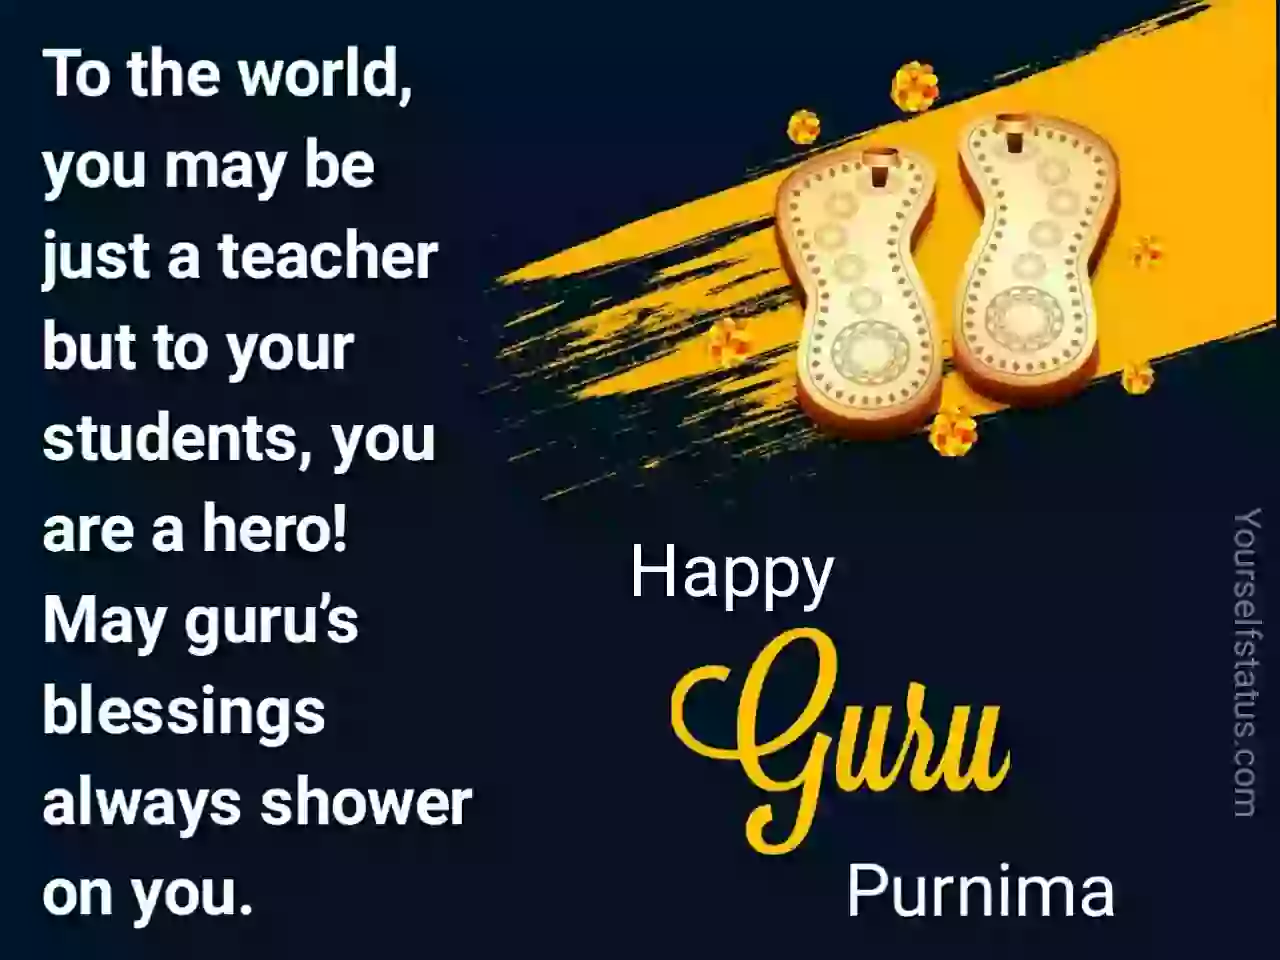 Happy Guru purnima messages in english